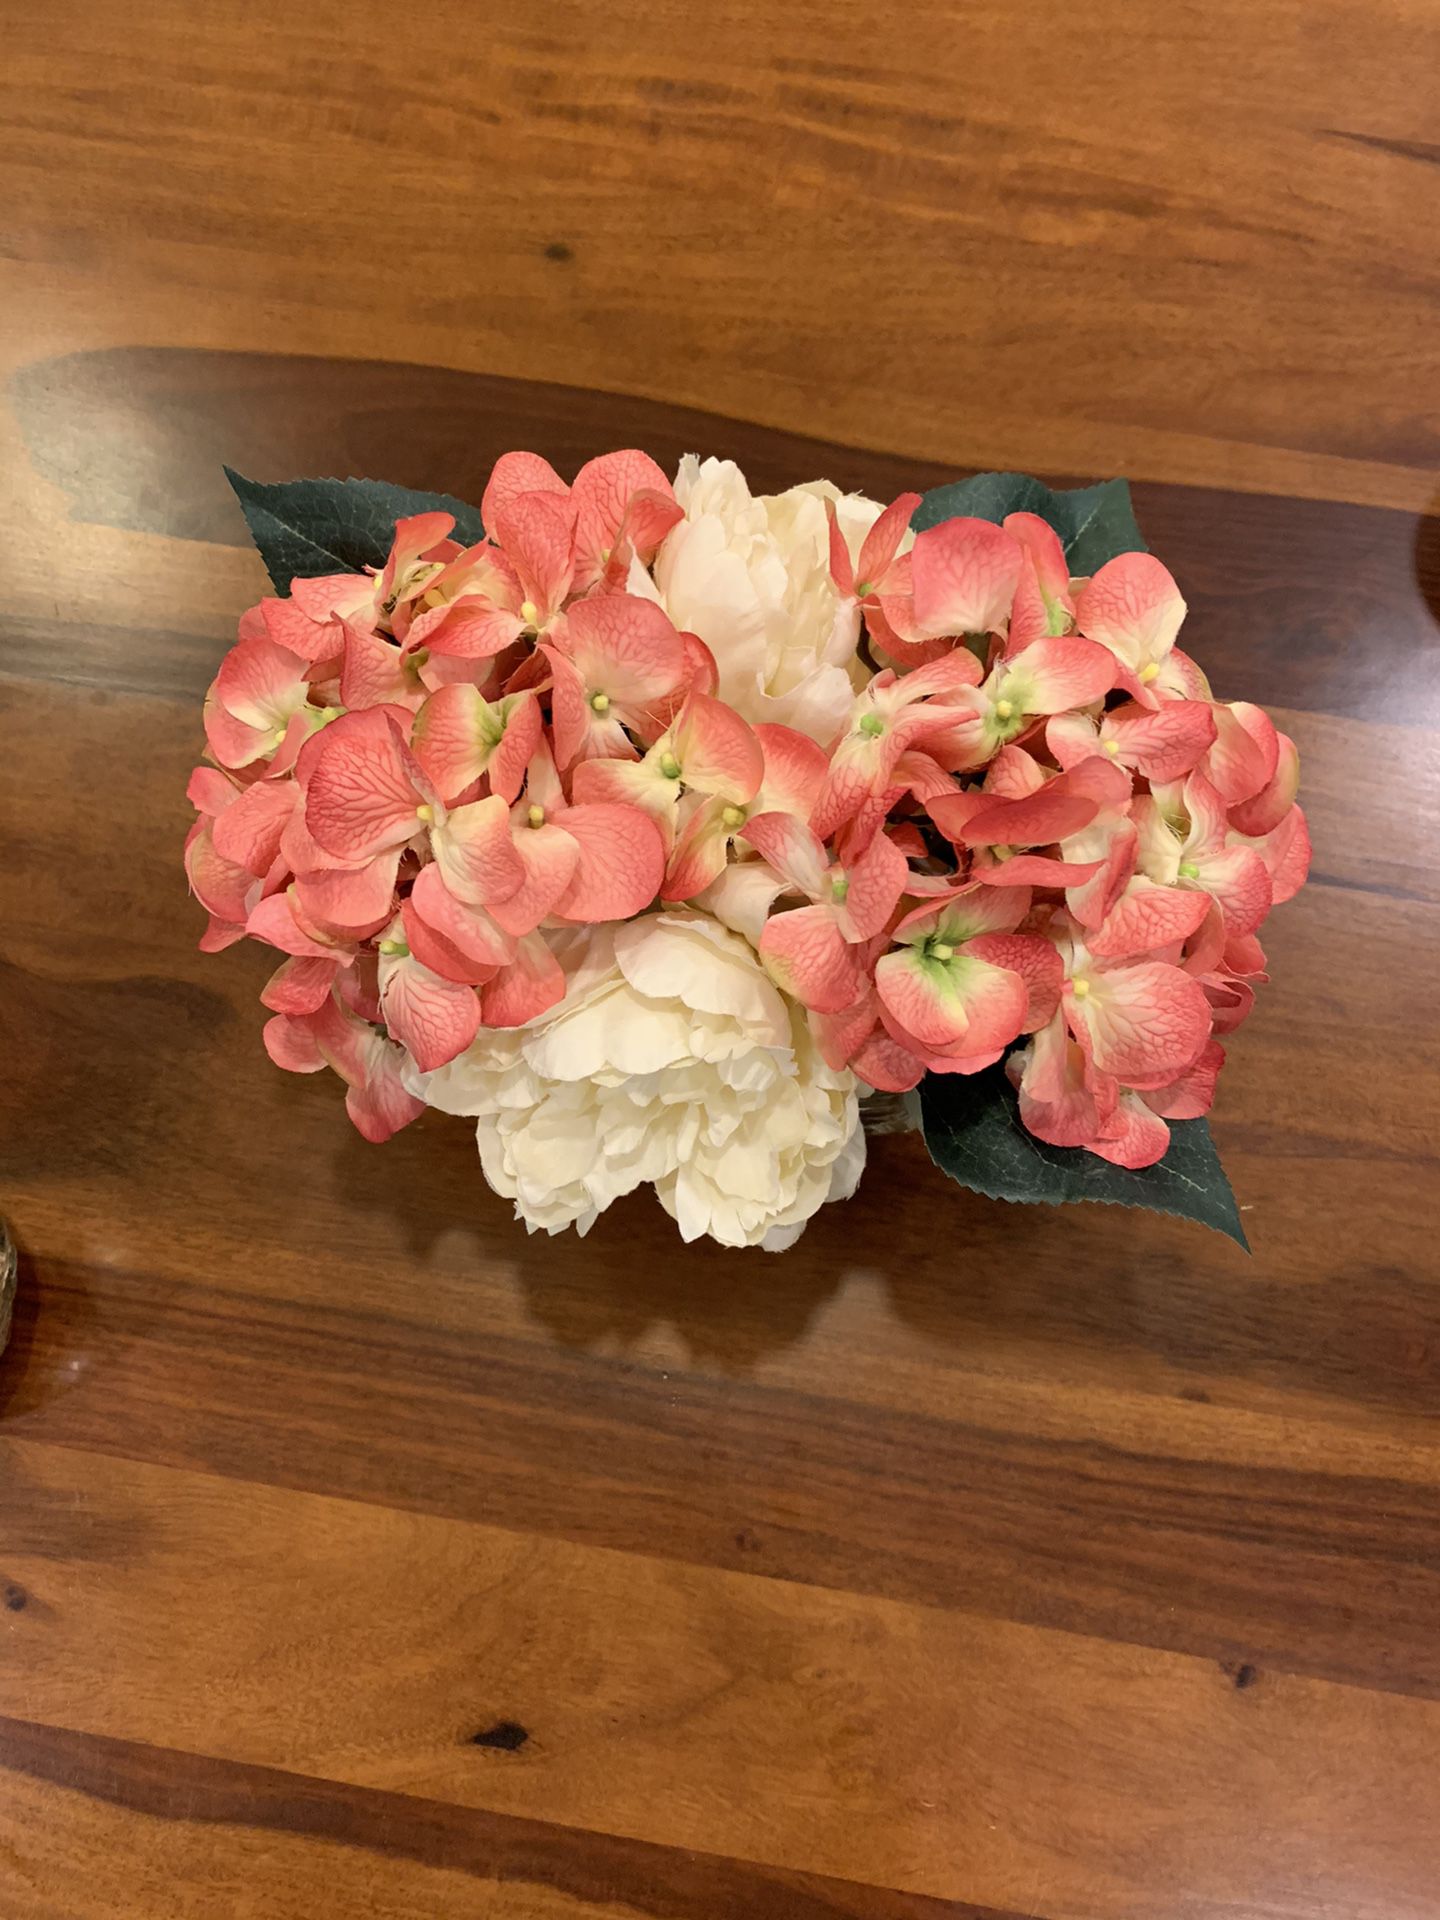 Decorative flowers & vase (peonies)